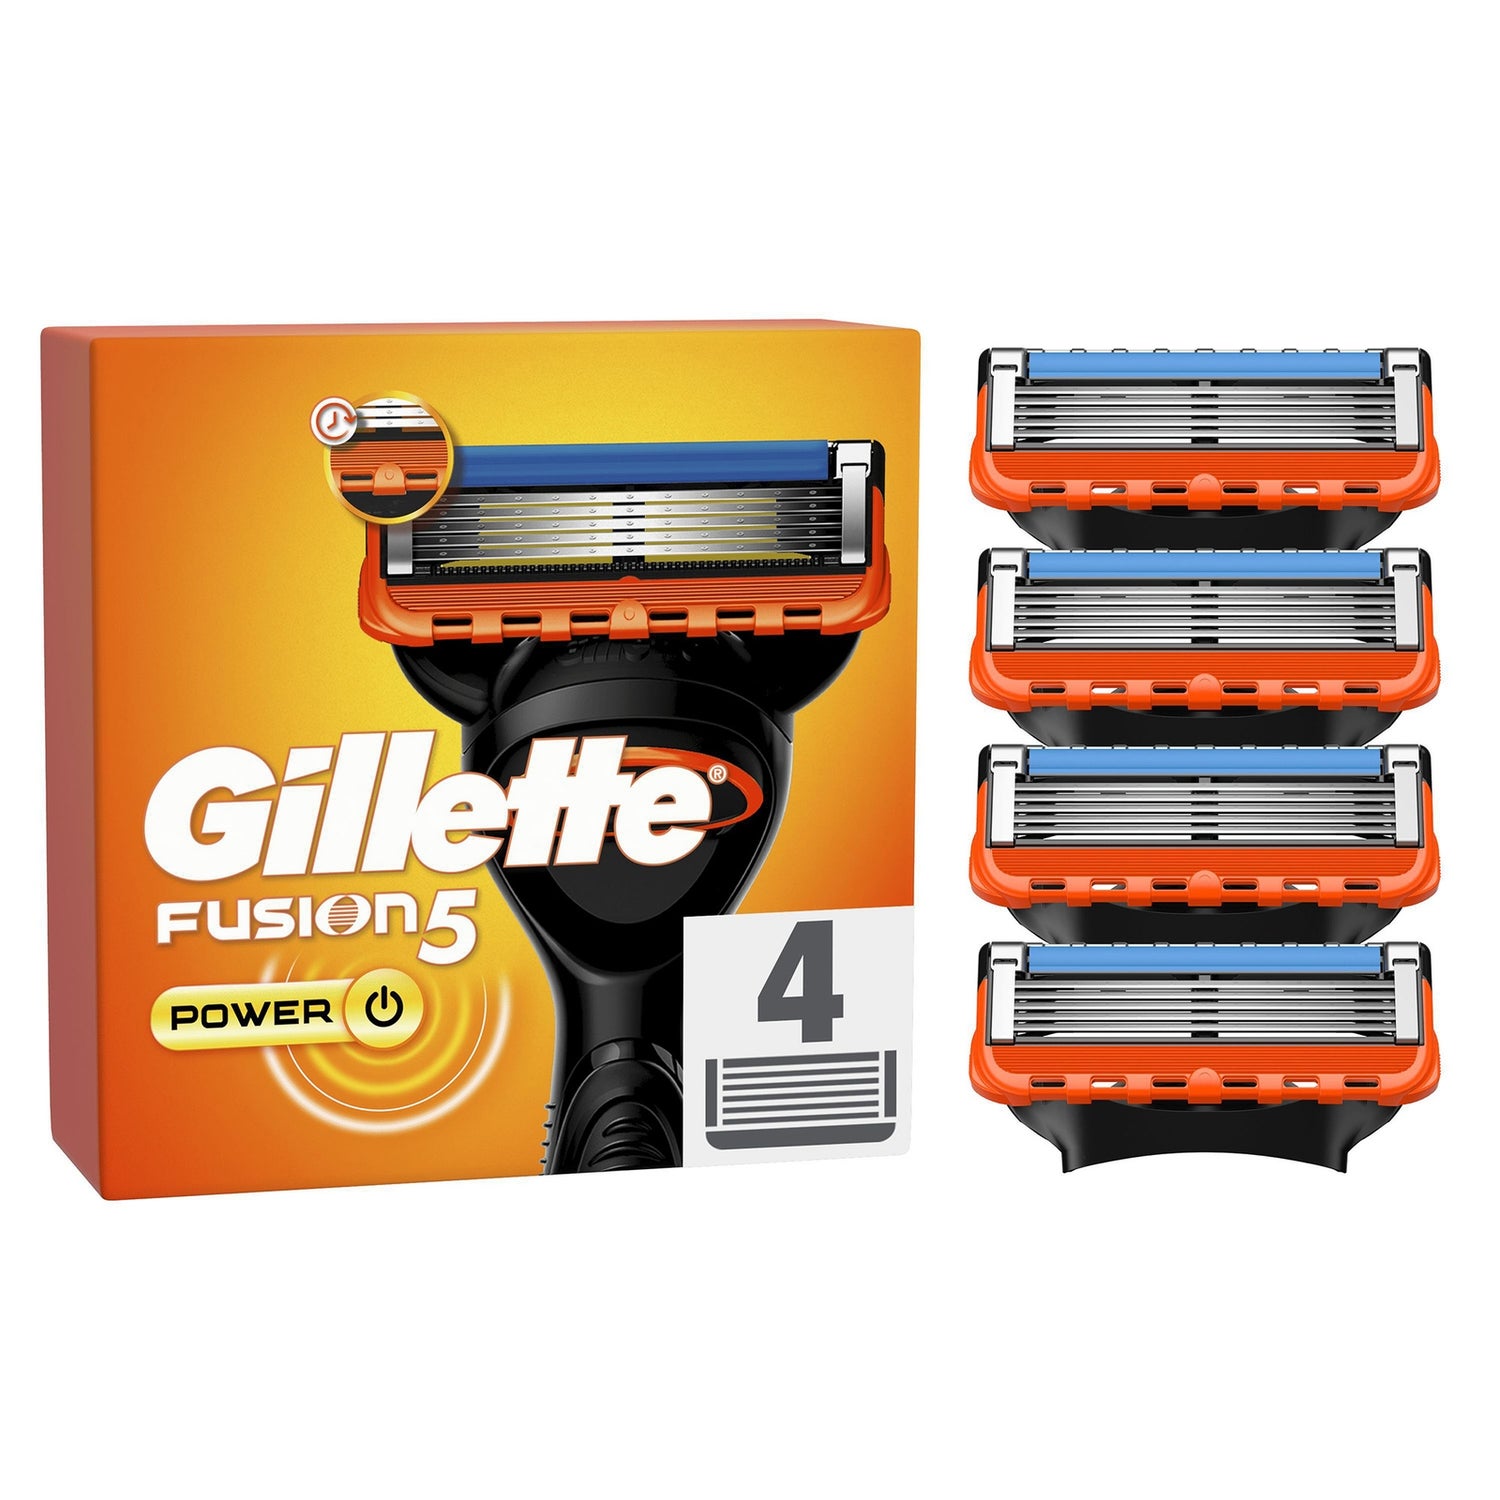 Gillette Fusion5 Power Razor Blades